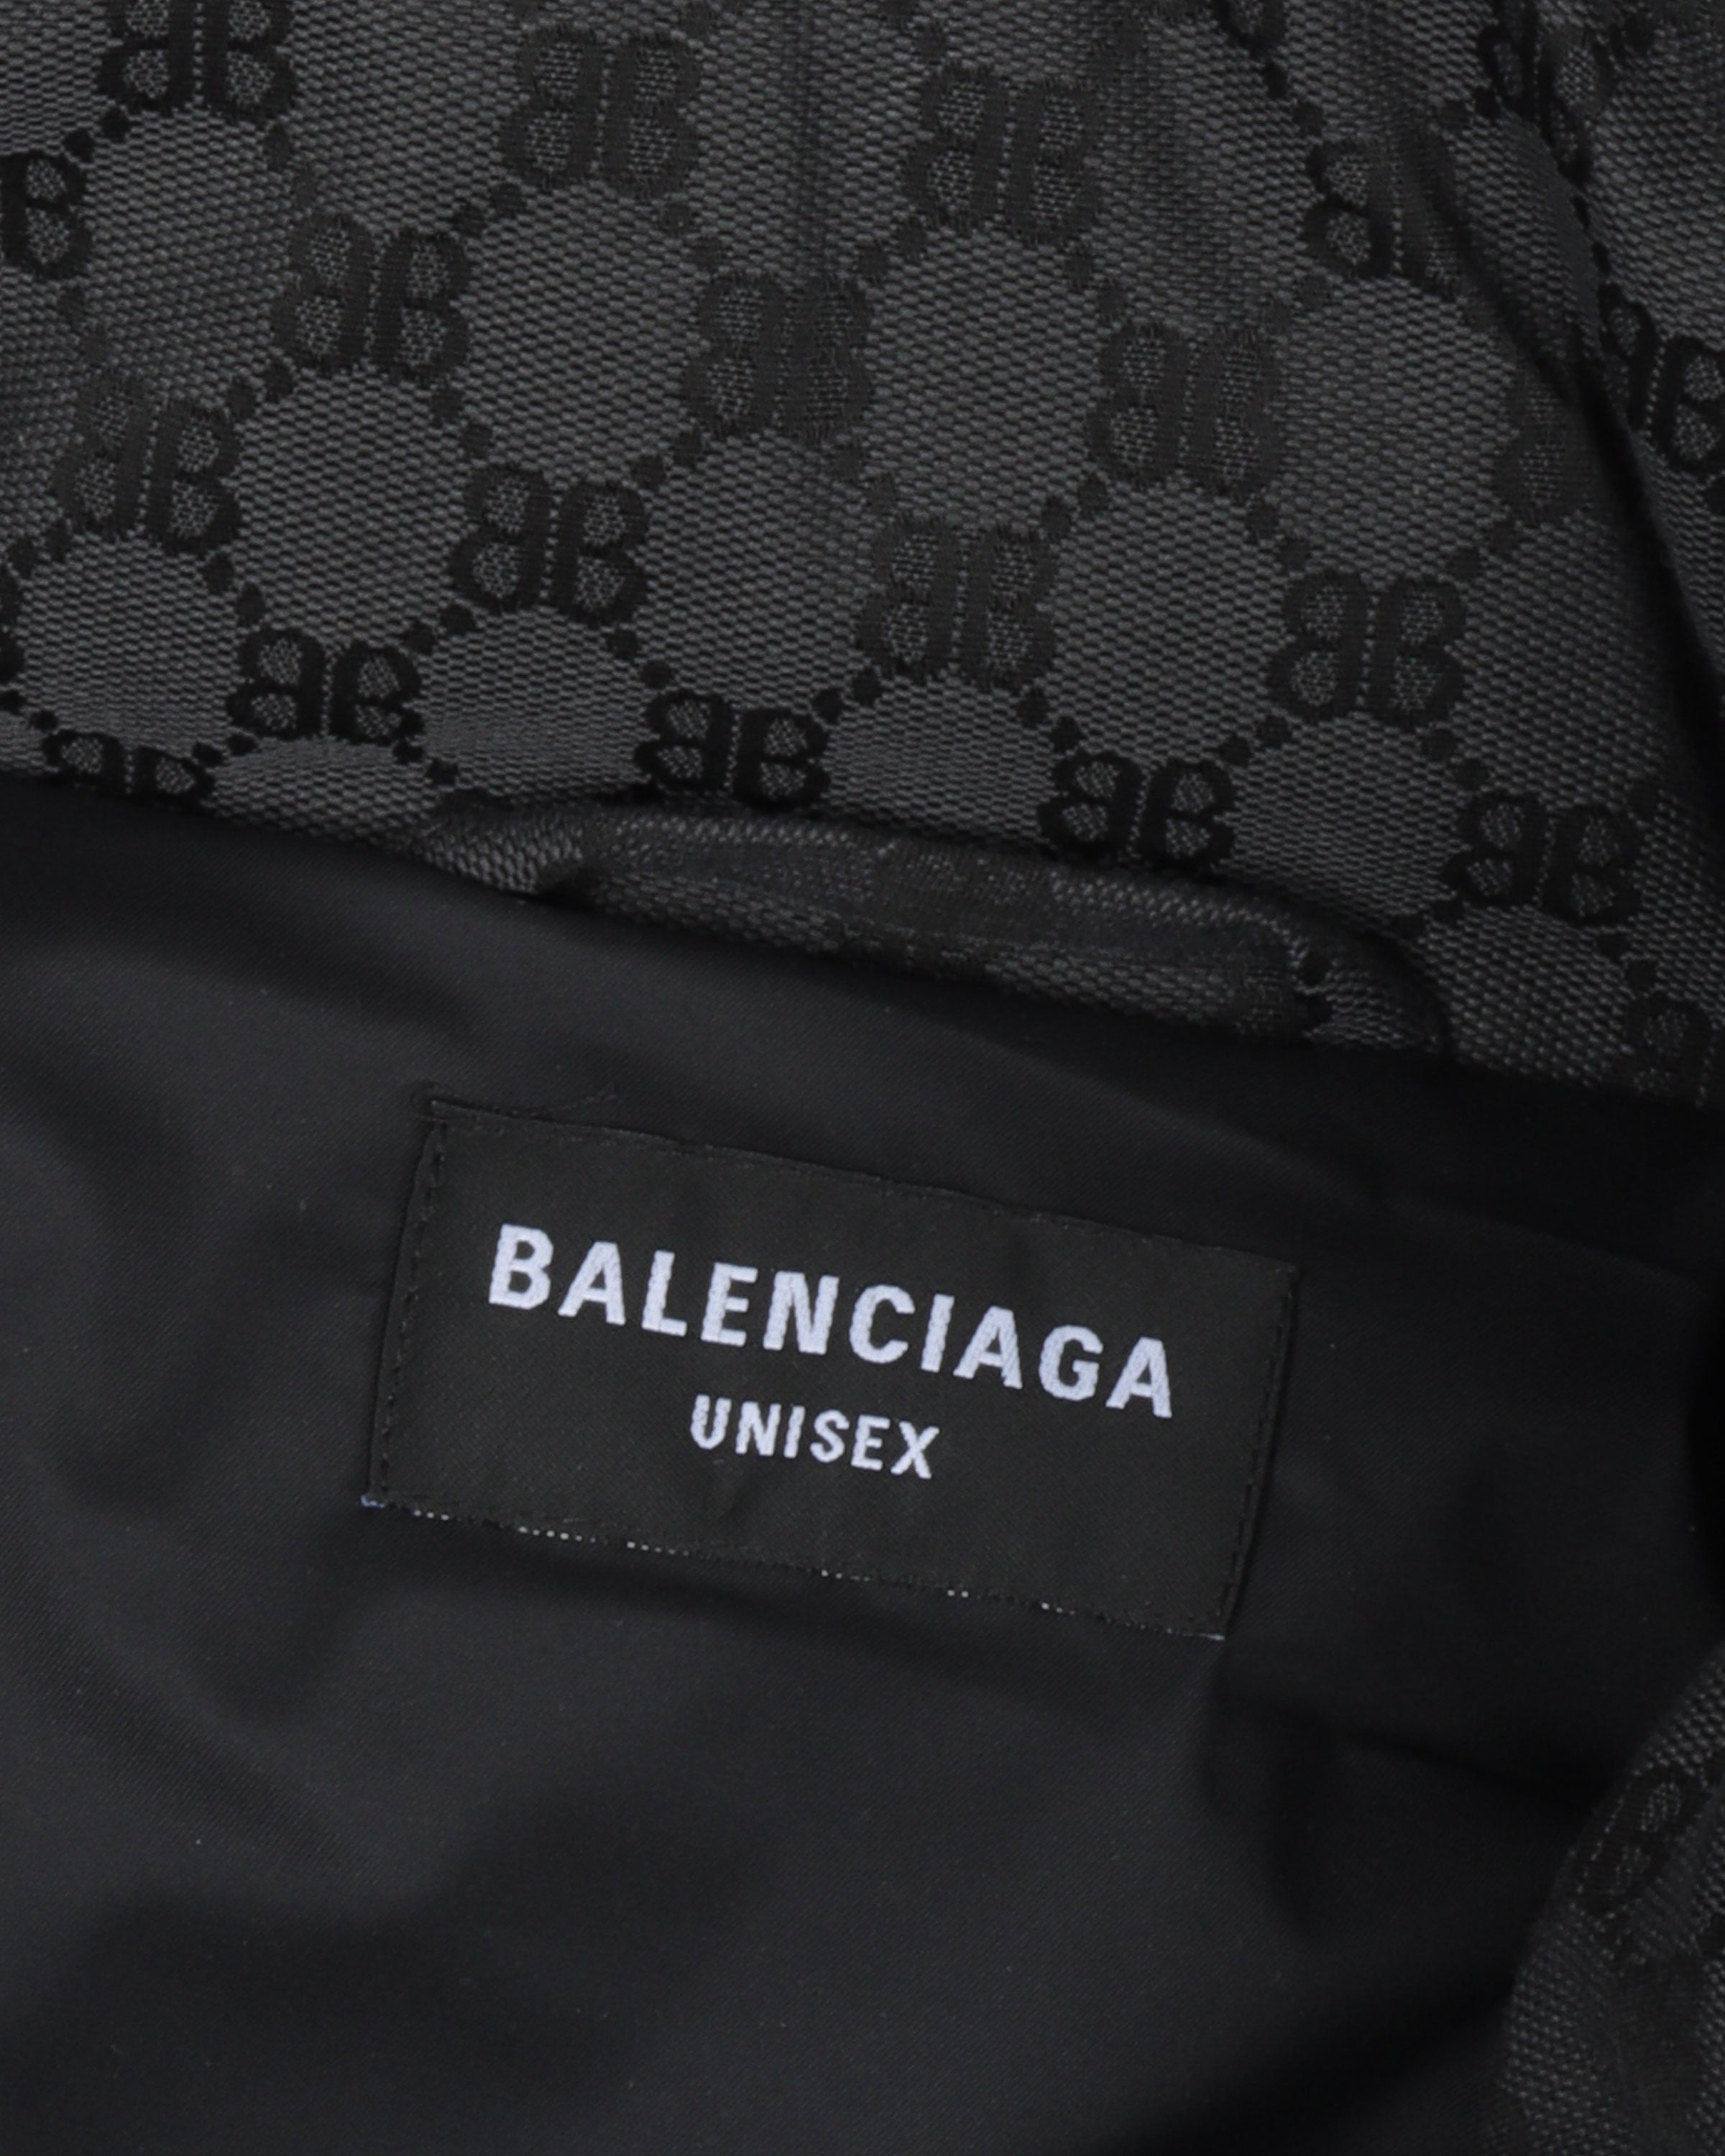 Gucci Hacker Balenciaga Woman's Puffer Gucci Jacket Balenciaga Jacket